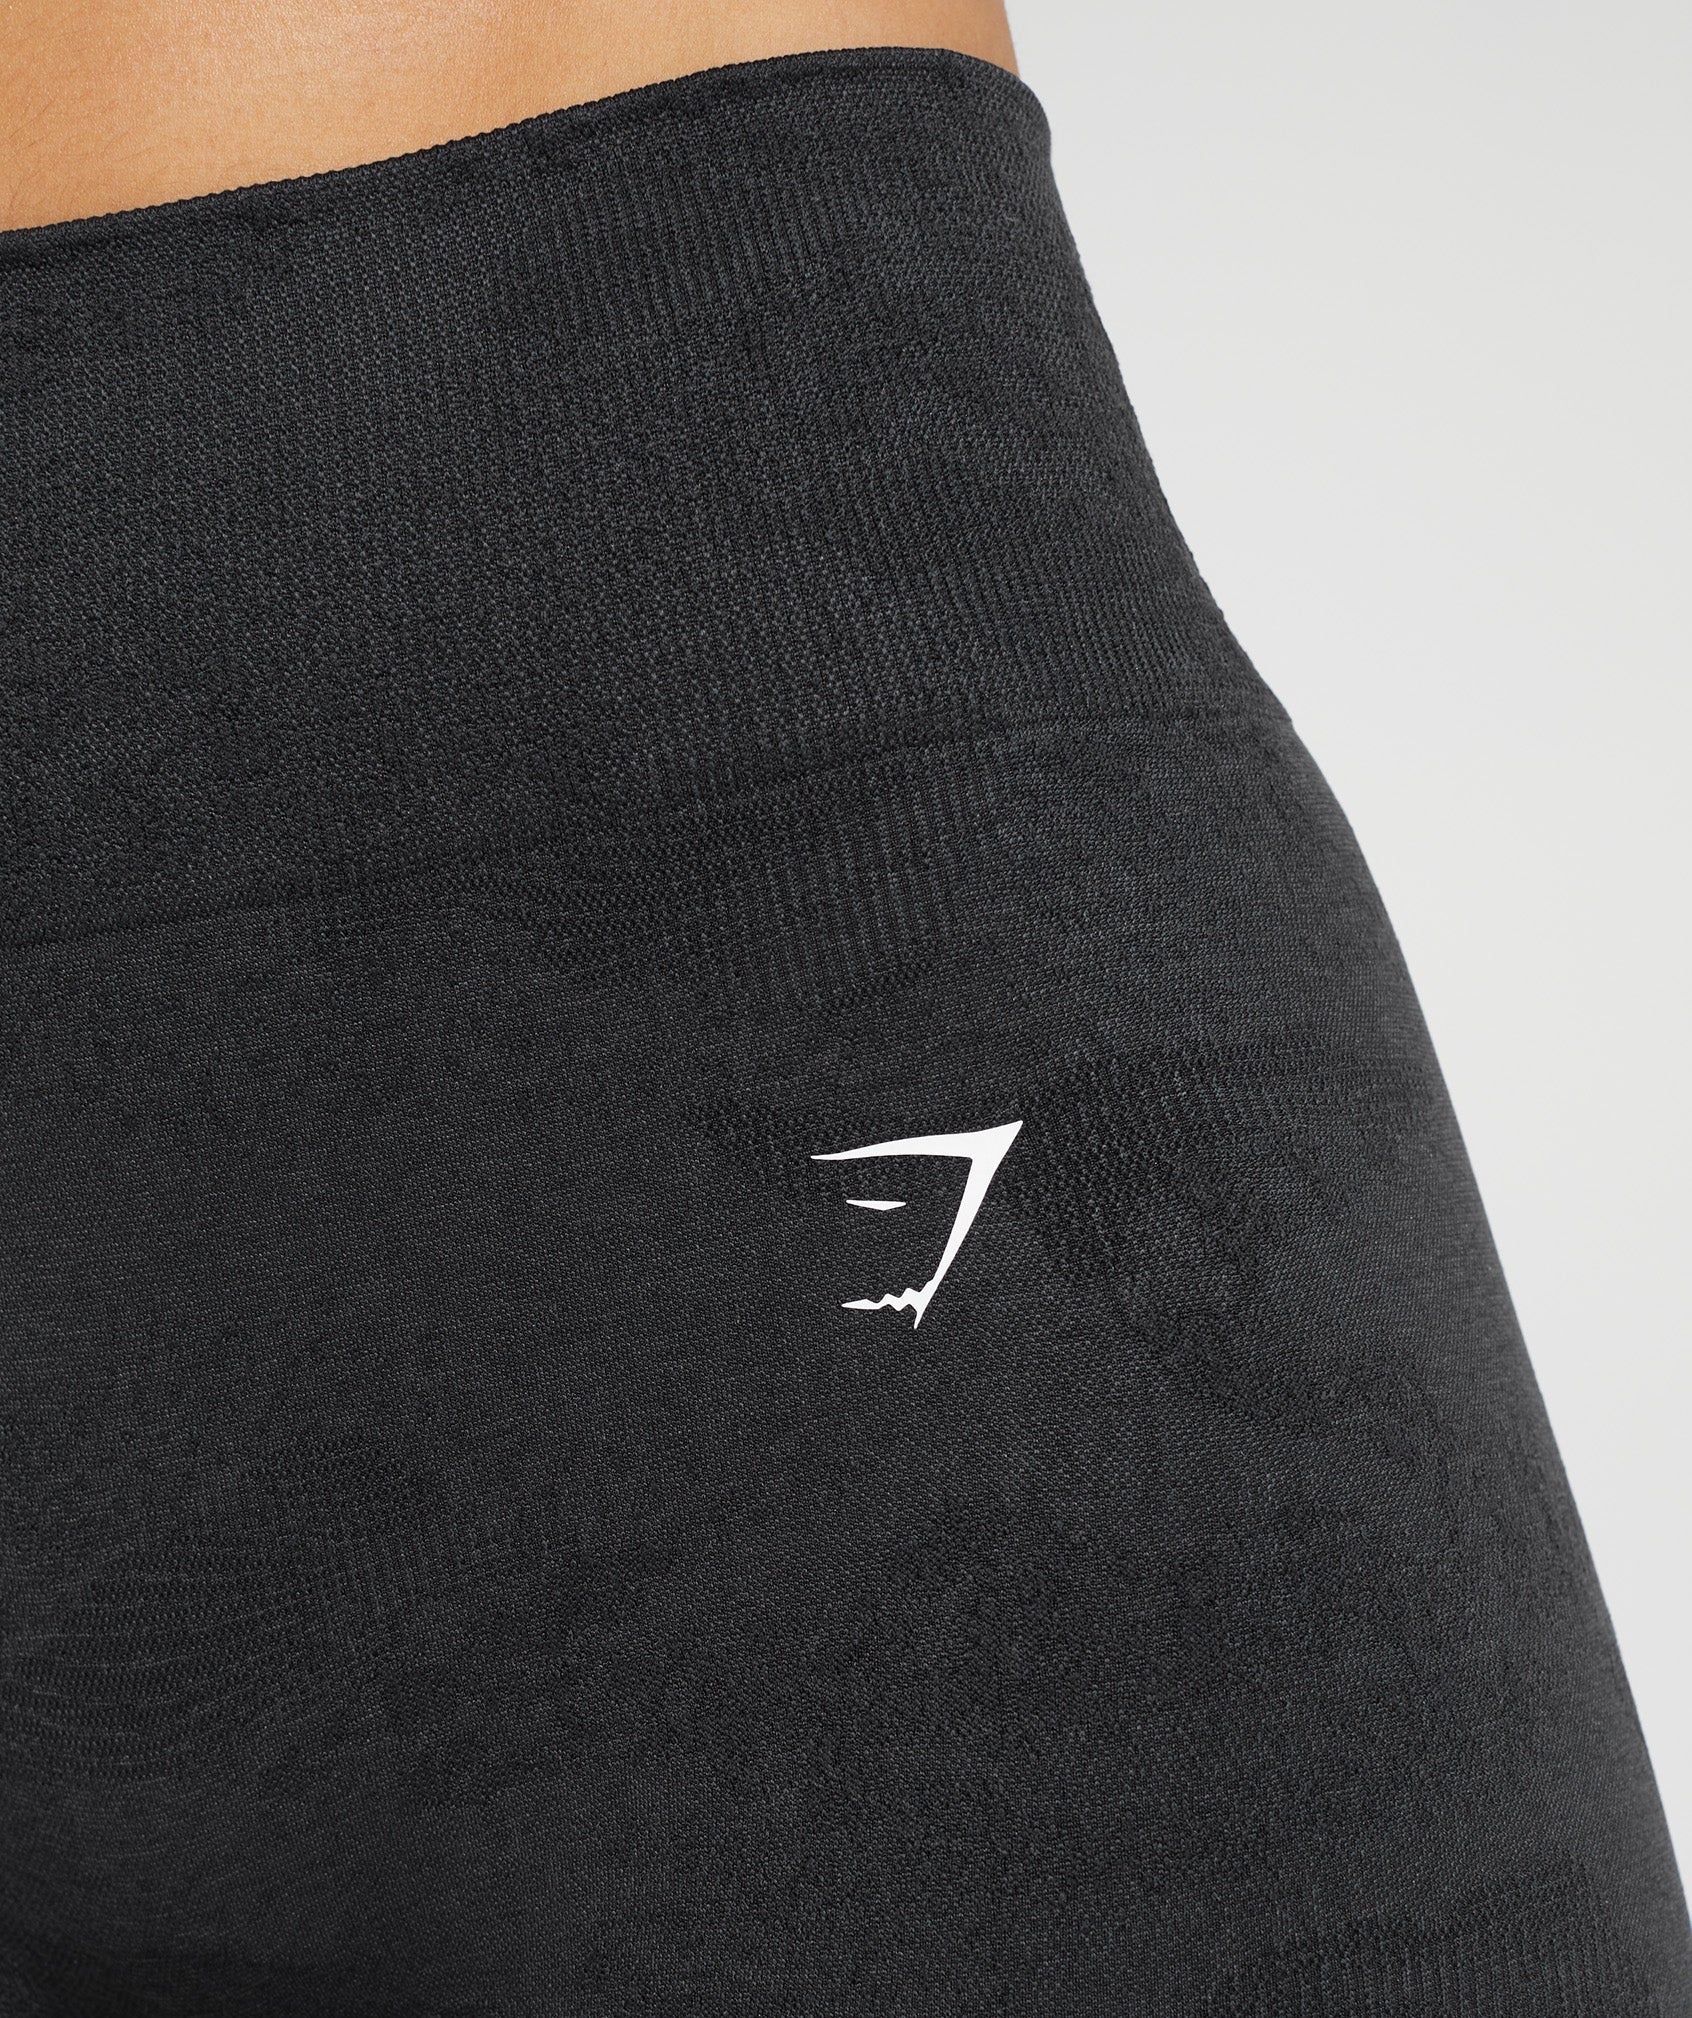 Adapt Camo Seamless Shorts in Black/Onyx Grey